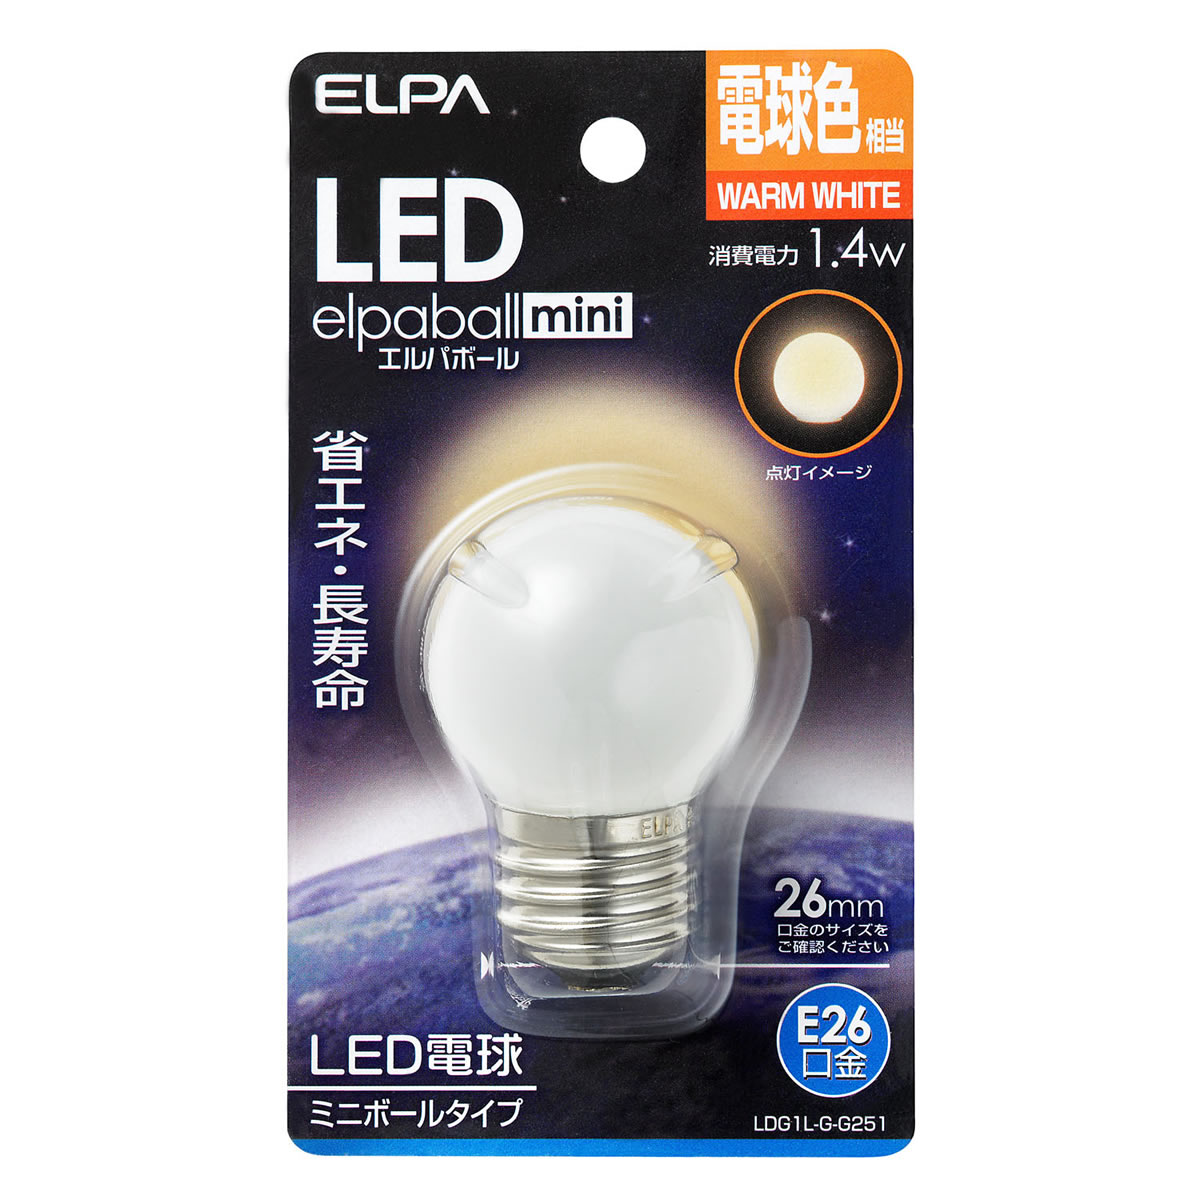 ELPA 朝日電器 LED電球エルパボールmini 装飾電球ミニボール球タイプG40形 1.4W電球色相当 E26LDG1L-G-G251